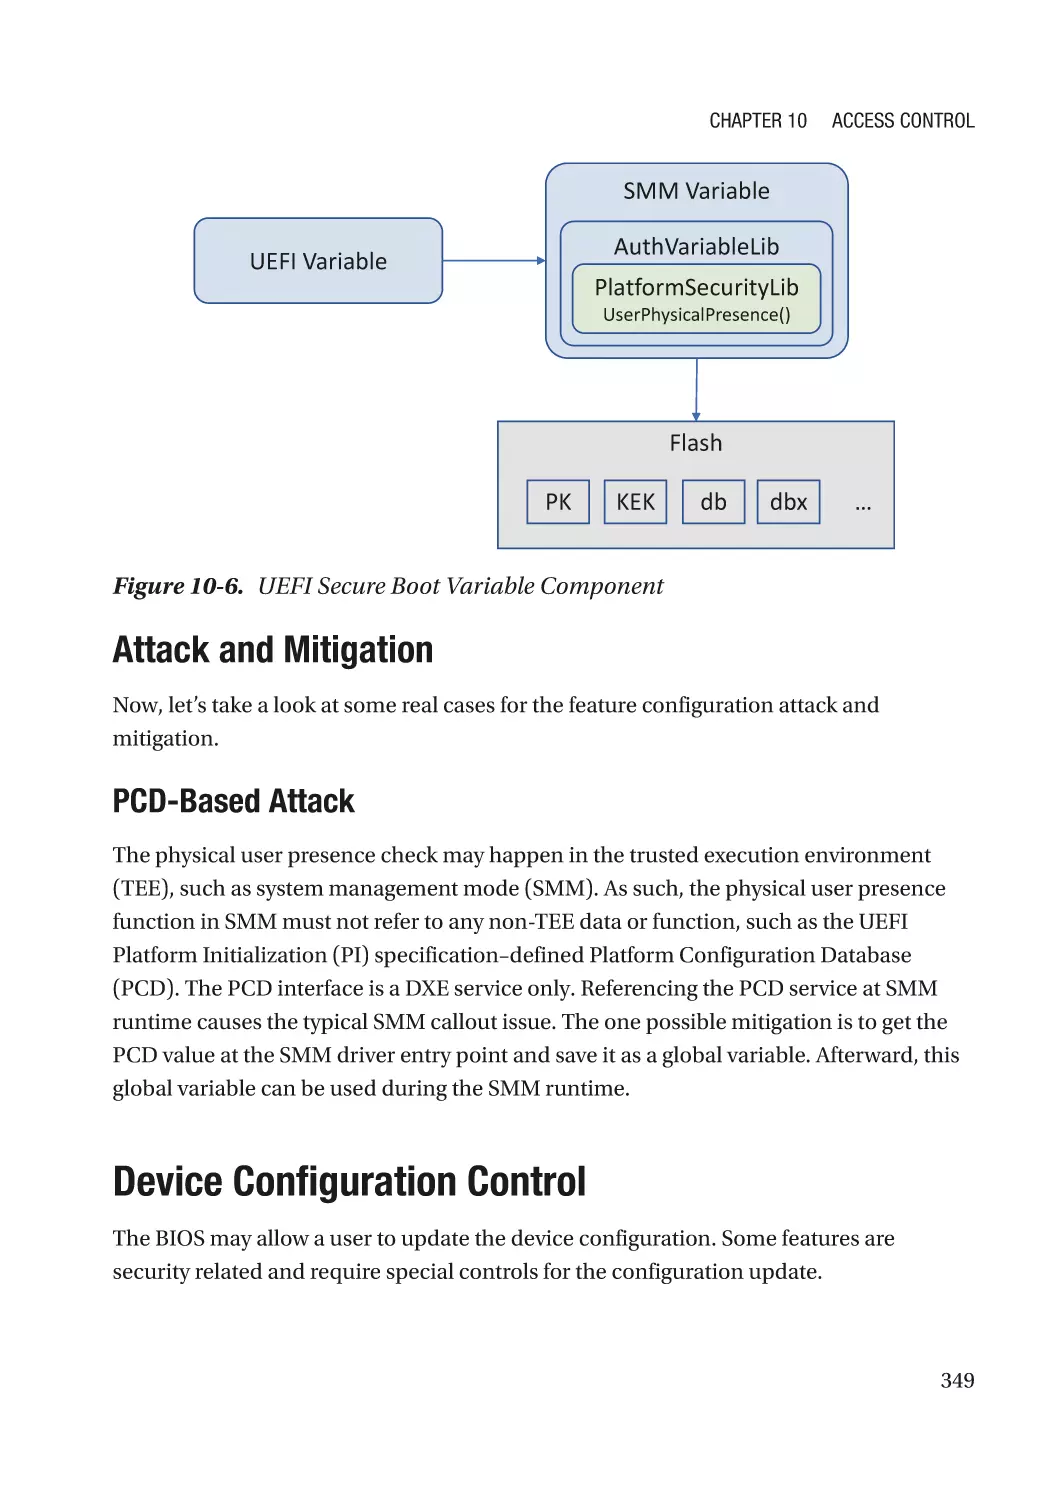 Attack and Mitigation
PCD-Based Attack
Device Configuration Control